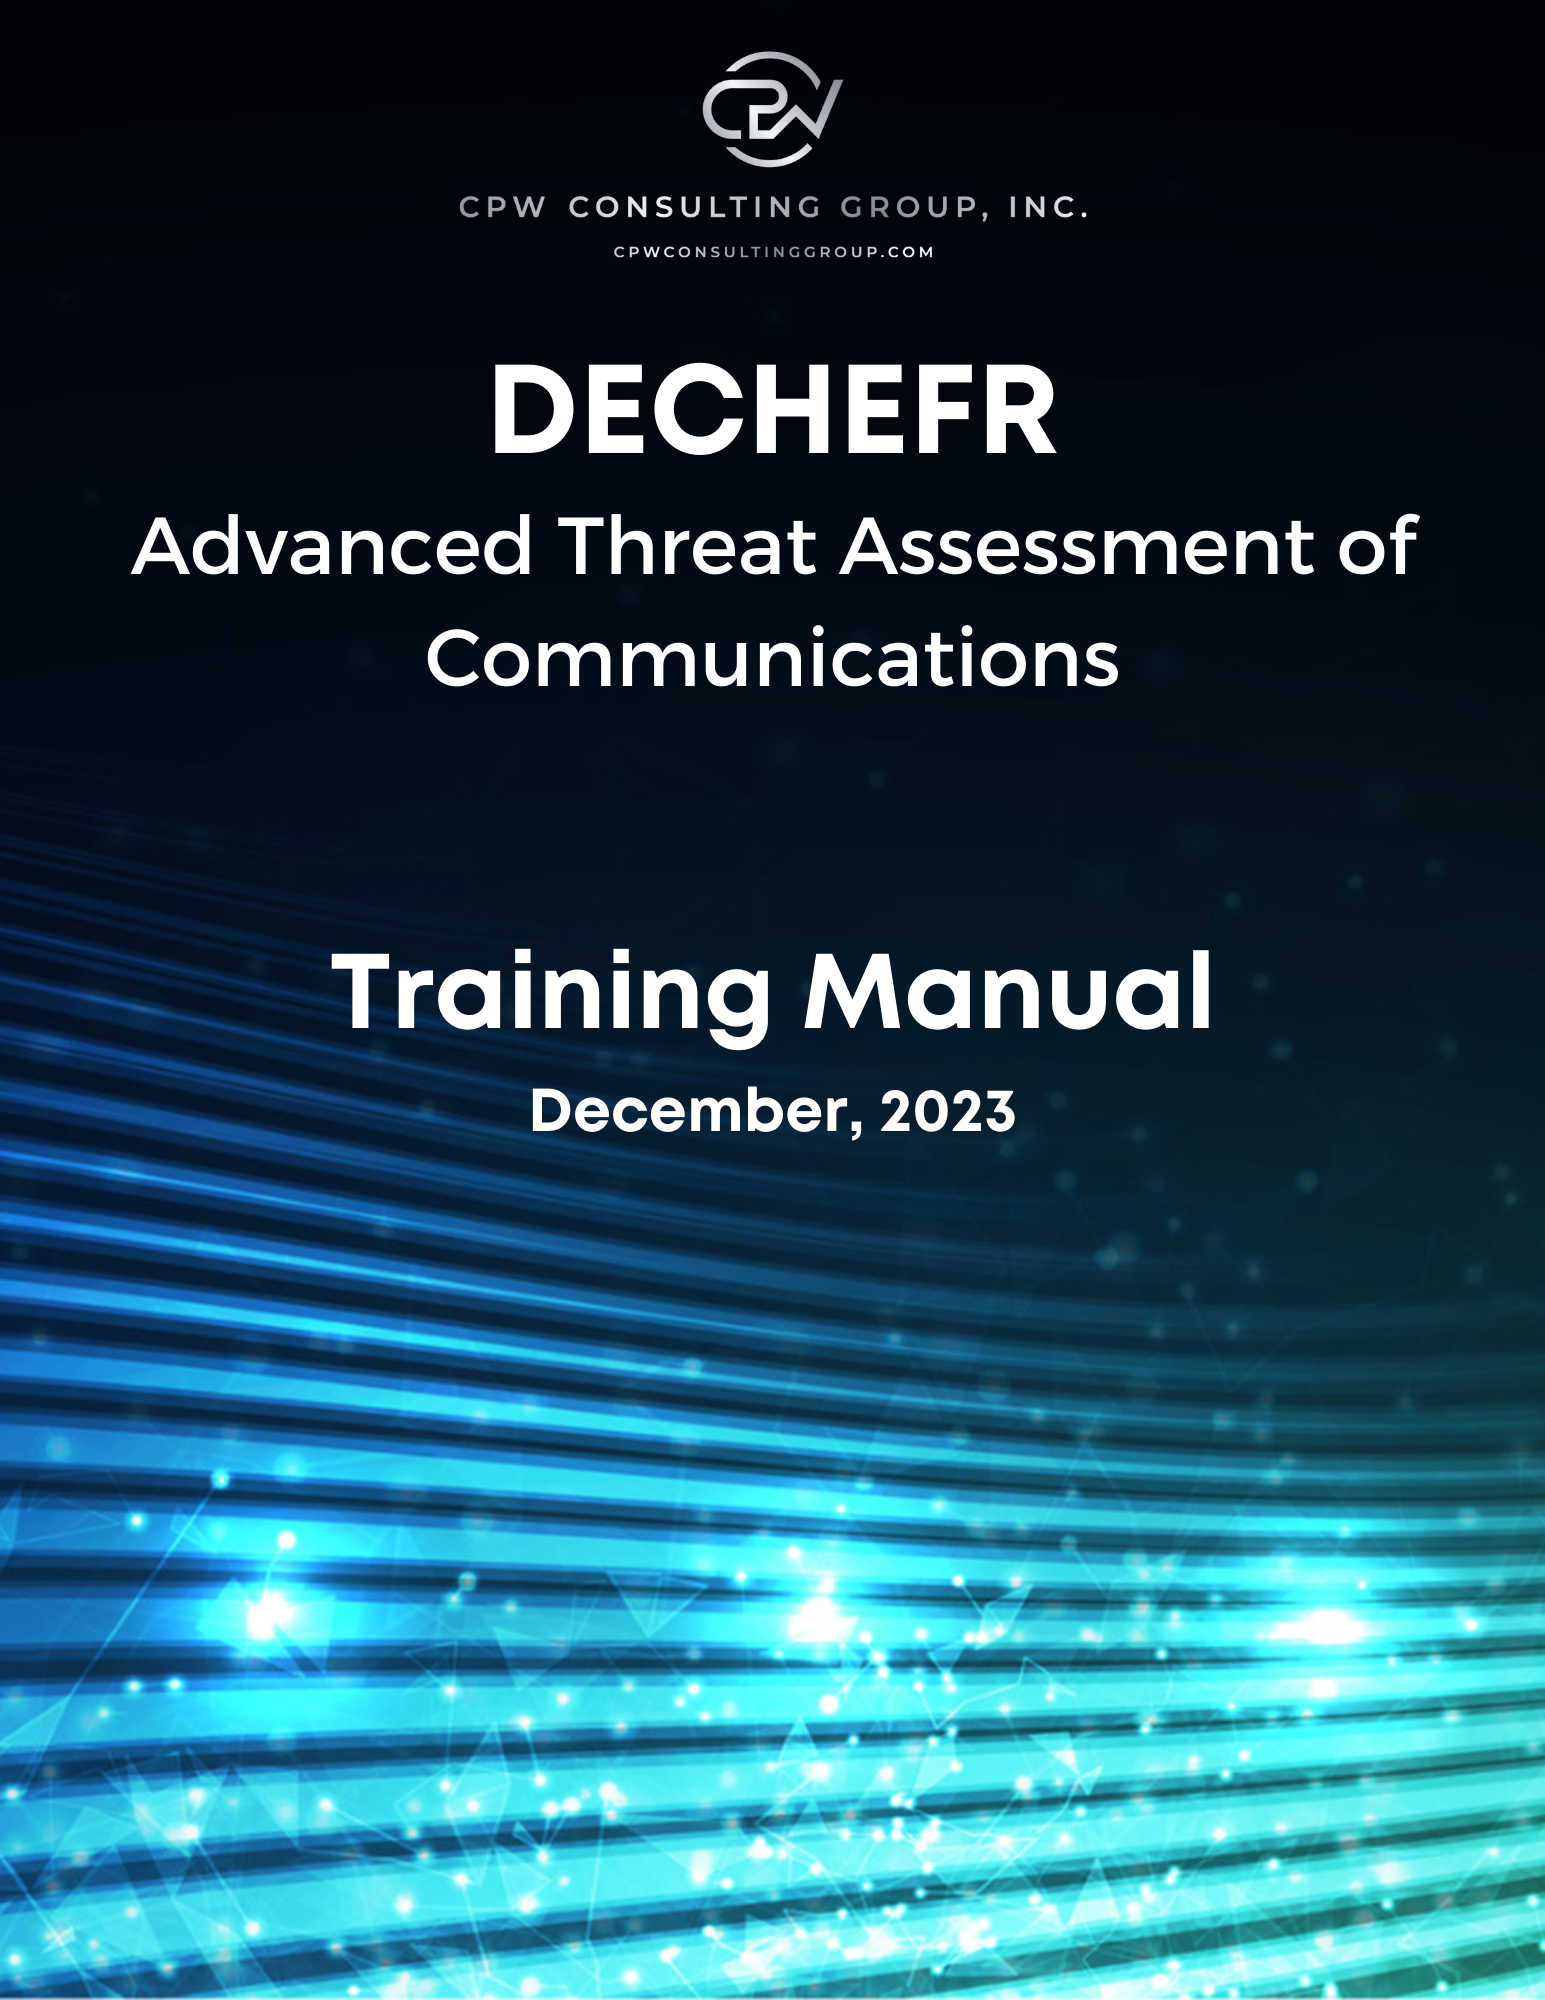 Dechefr Training Manual